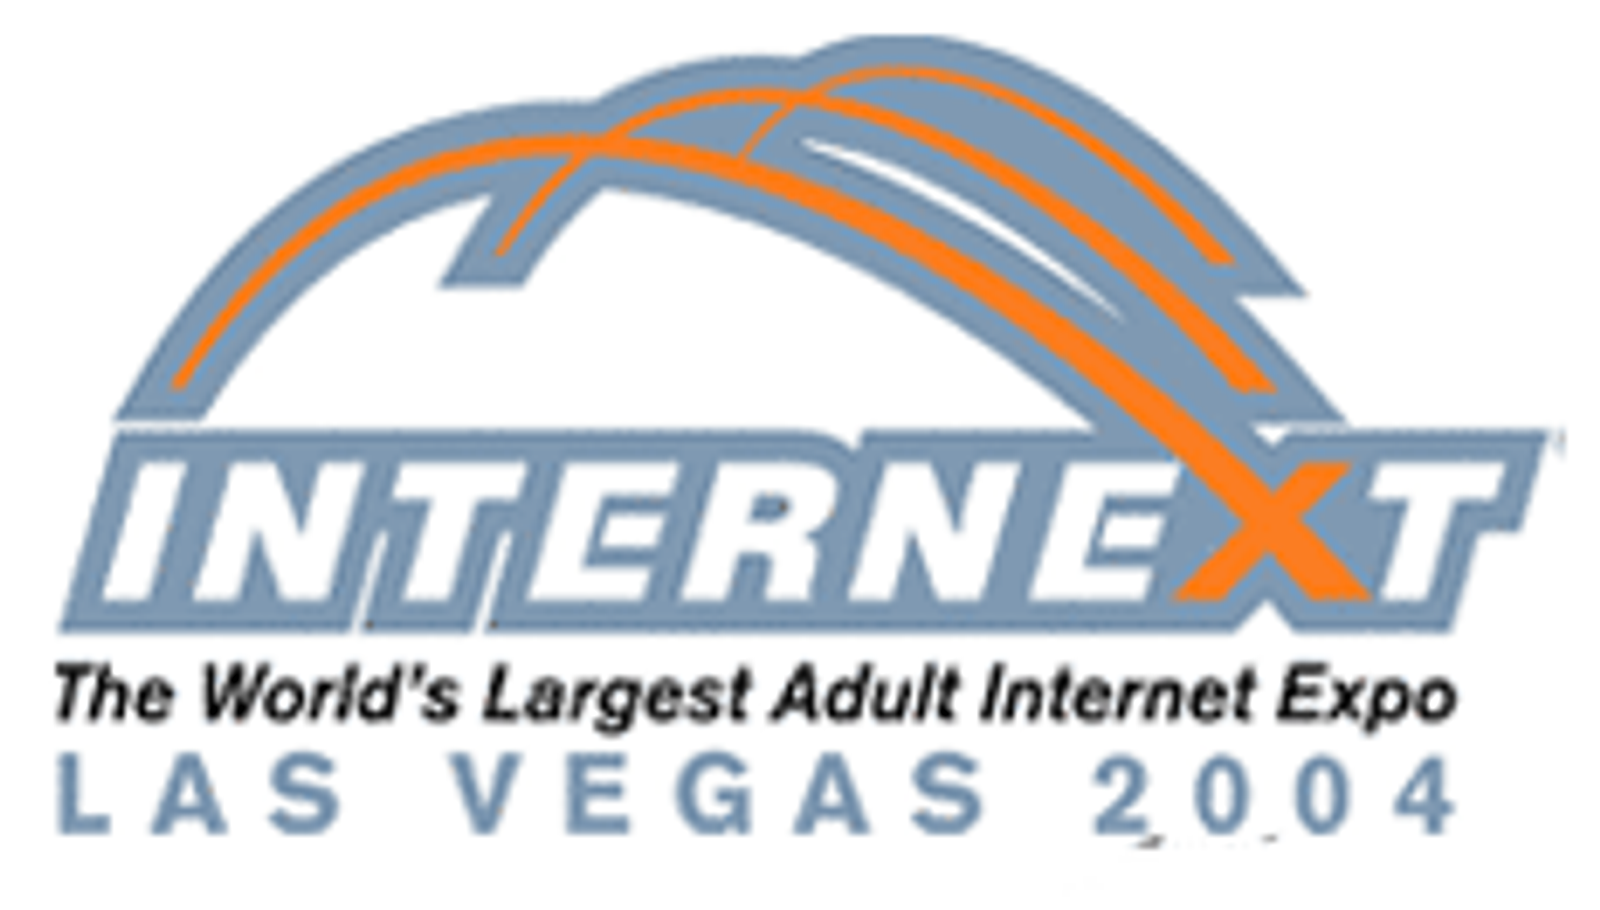 Full Slate of Leading Edge Seminars at Internext Expo